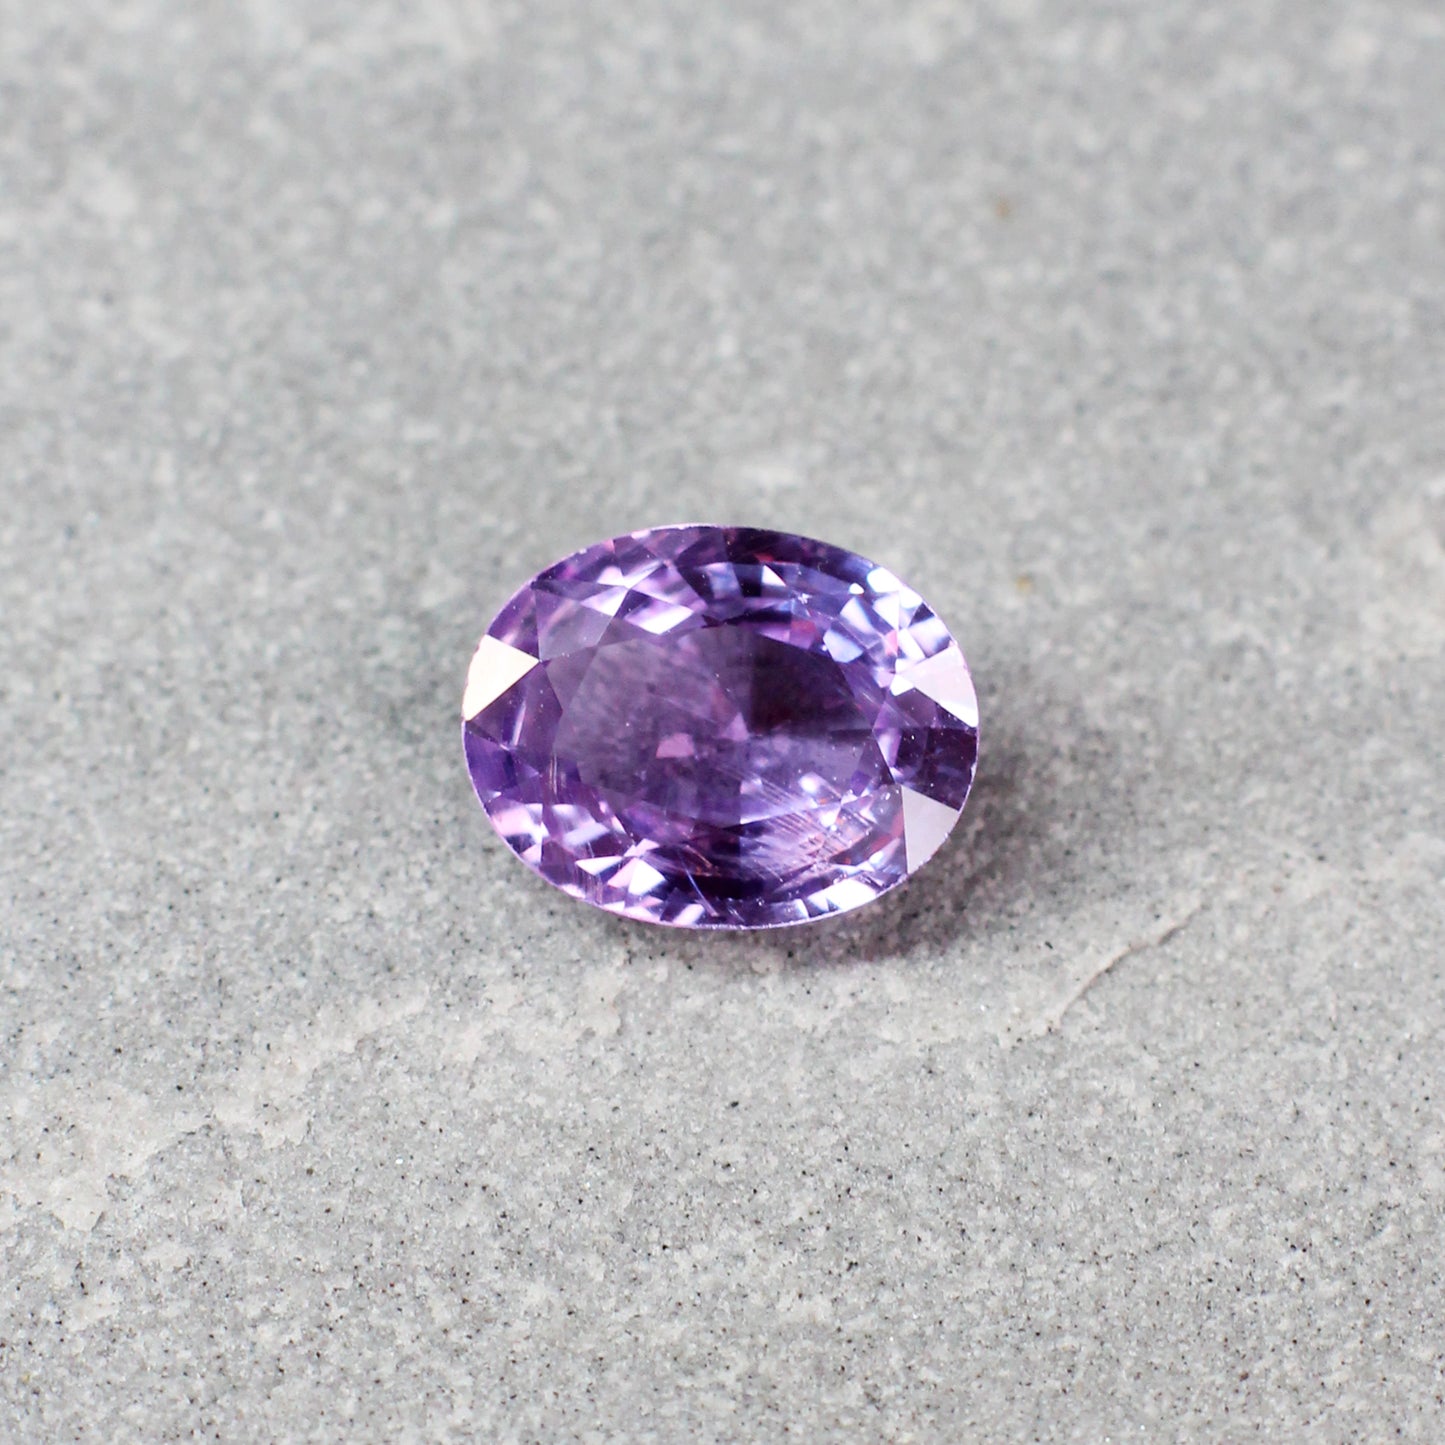 2.25ct Pinkish Purple, Oval Sapphire, Heated, Madagascar - 9.10 x 7.12 x 3.97mm